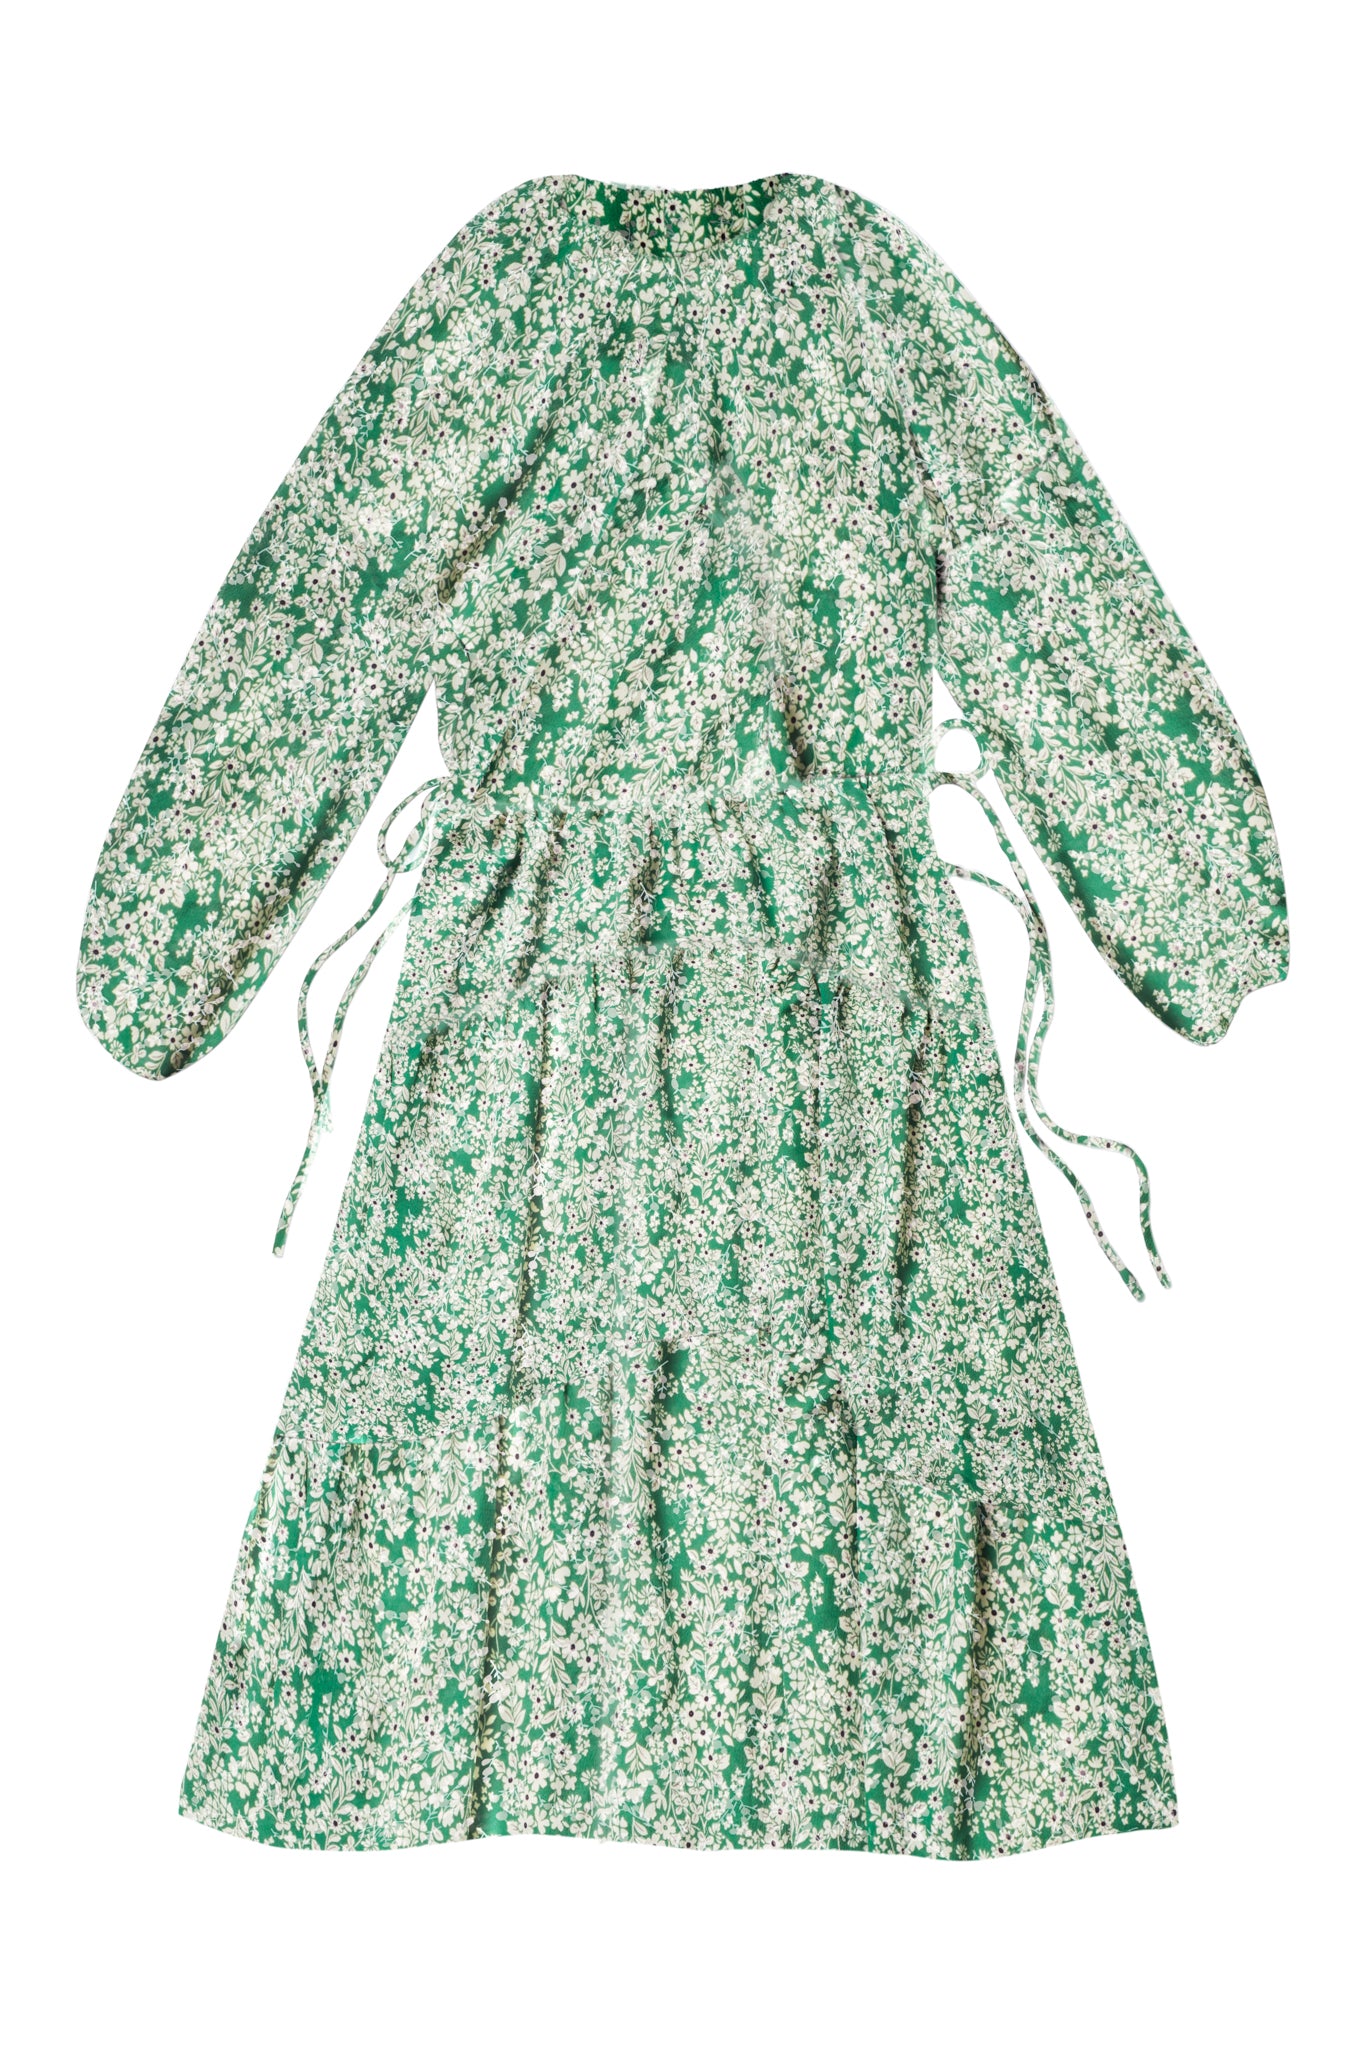 Gathered Dress in Green Flower Print #7903